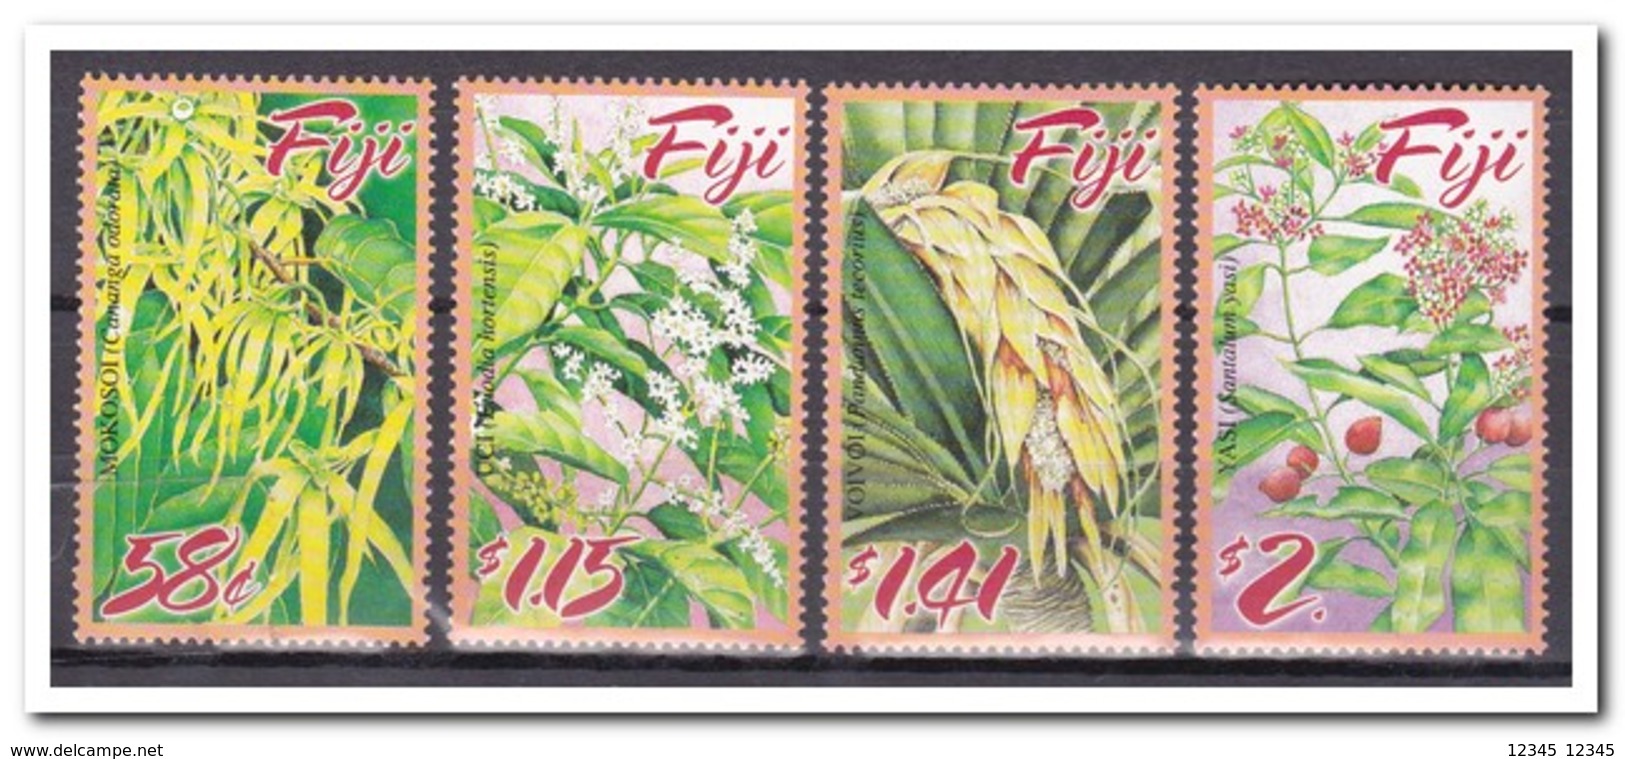 Fiji 2005, Postfris MNH, Plants - Fiji (1970-...)